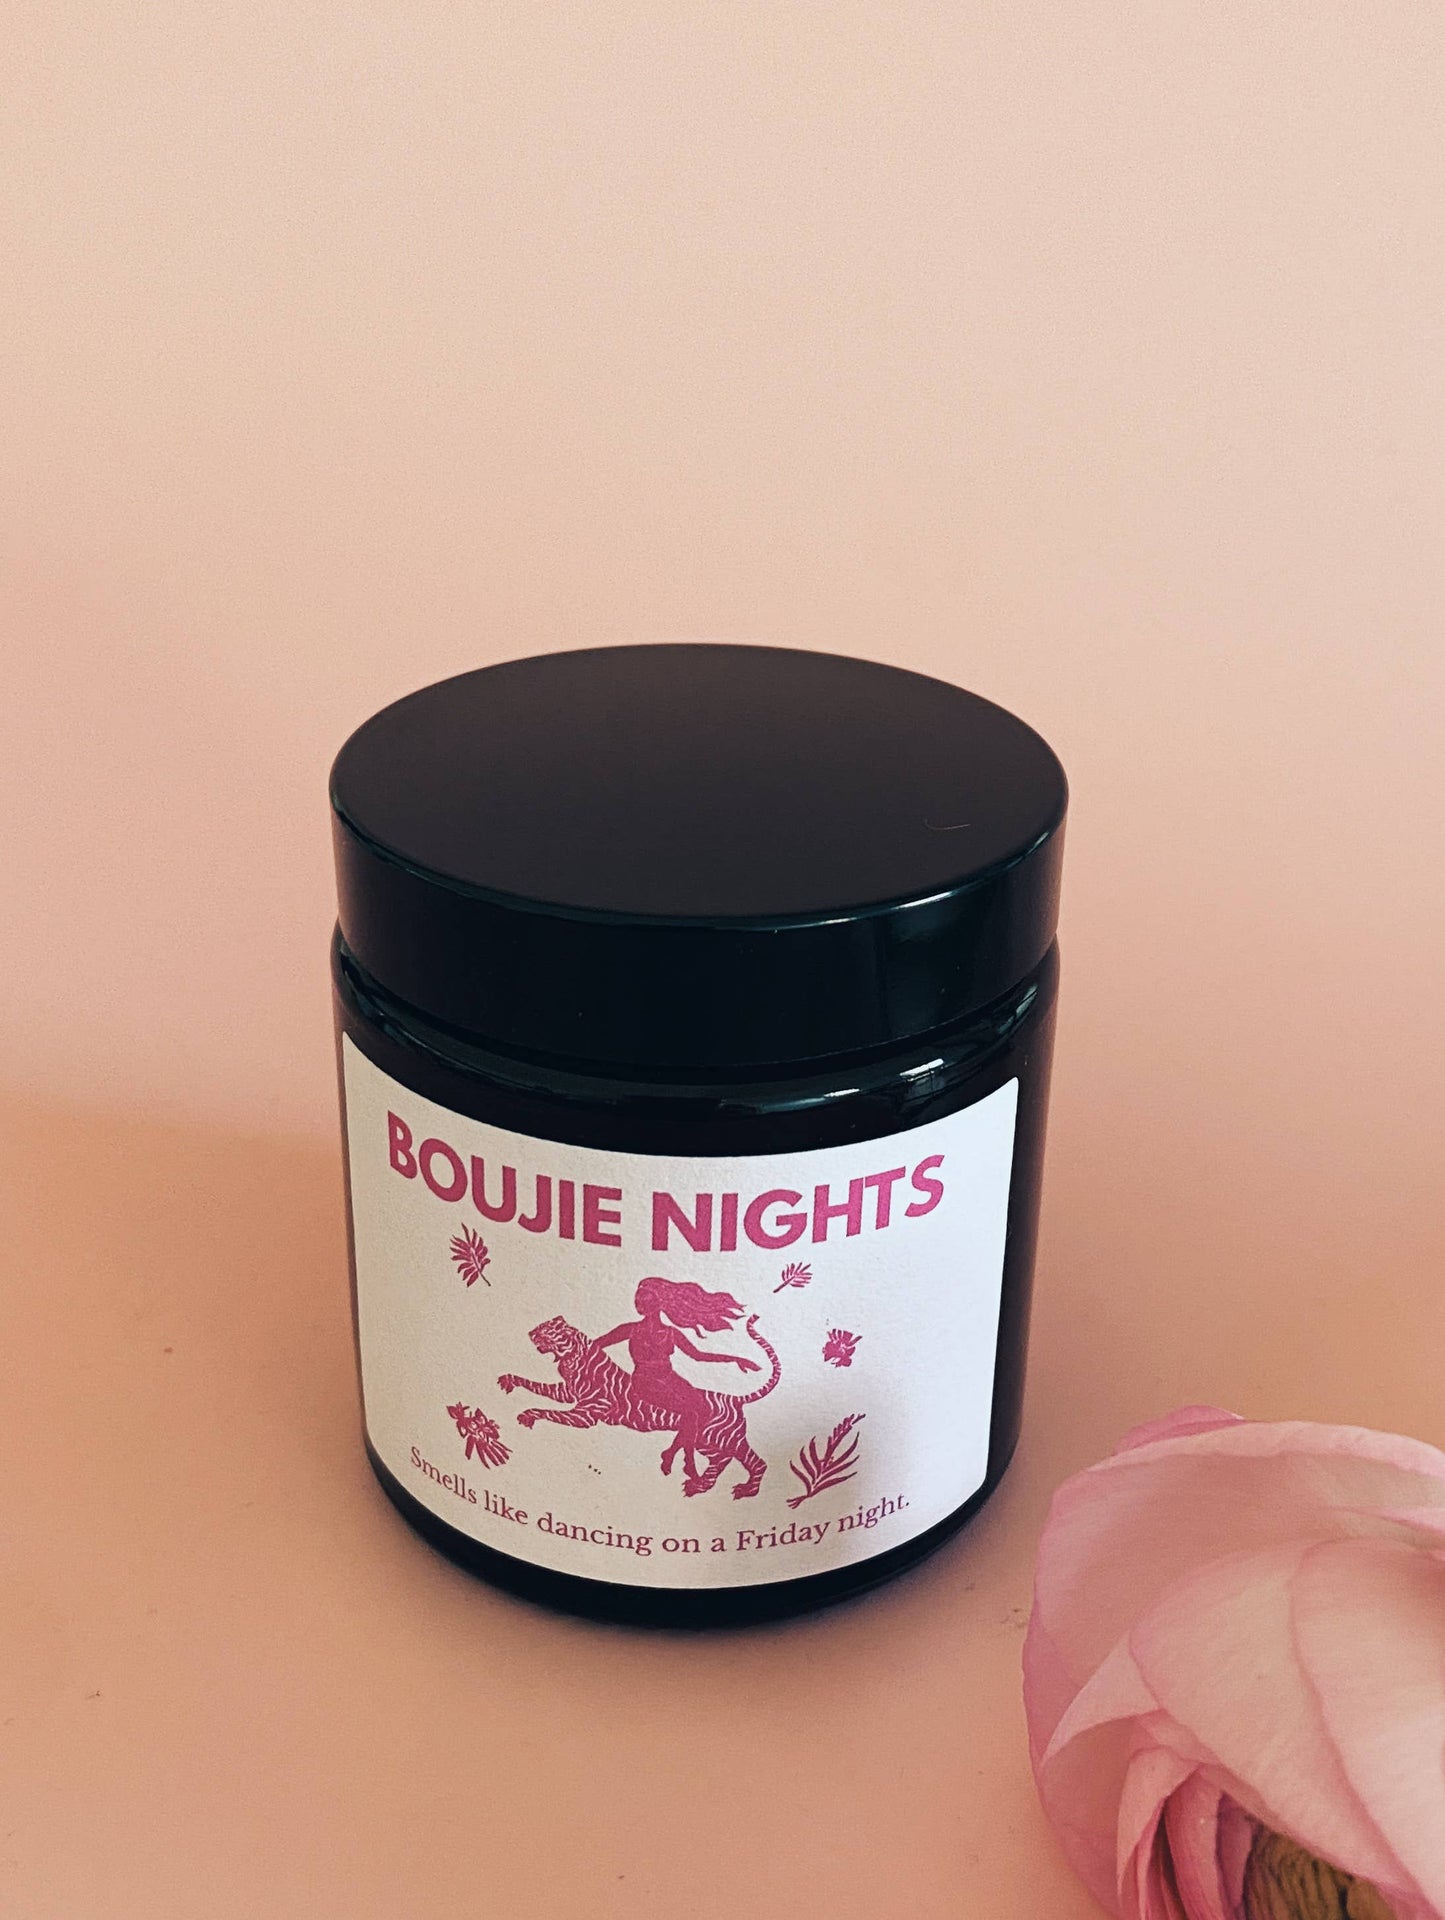 Les Boujies - Boujie Nights Mini - Vegan Soy Wax Candle